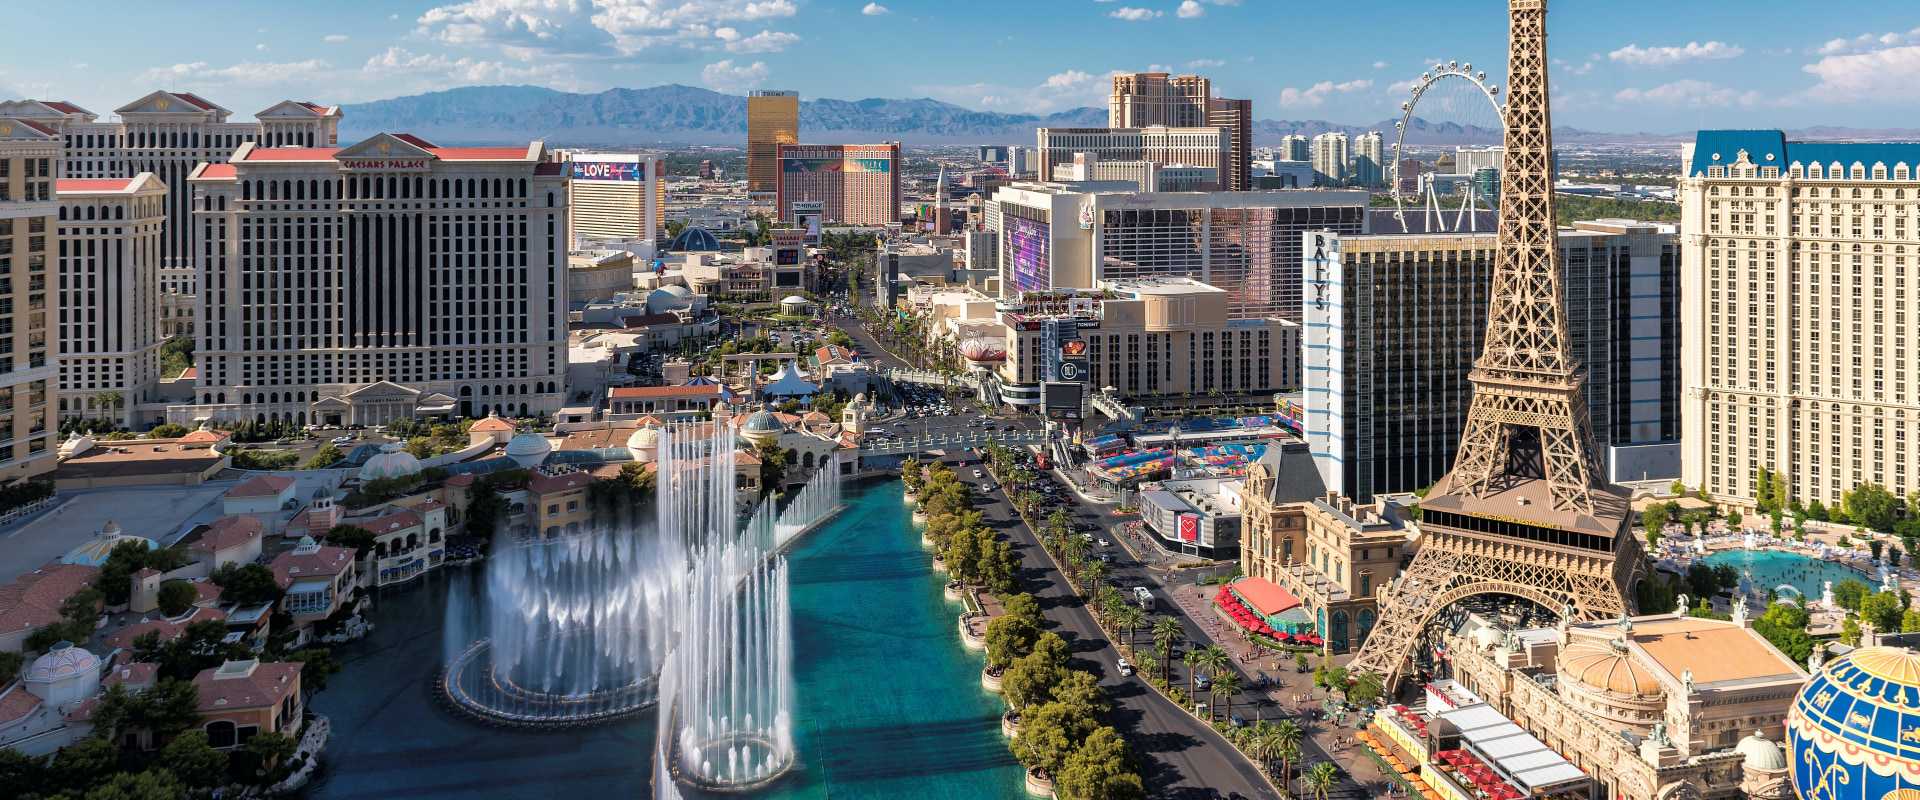 Exploring the Best Neighborhoods in Las Vegas for Public Transportation